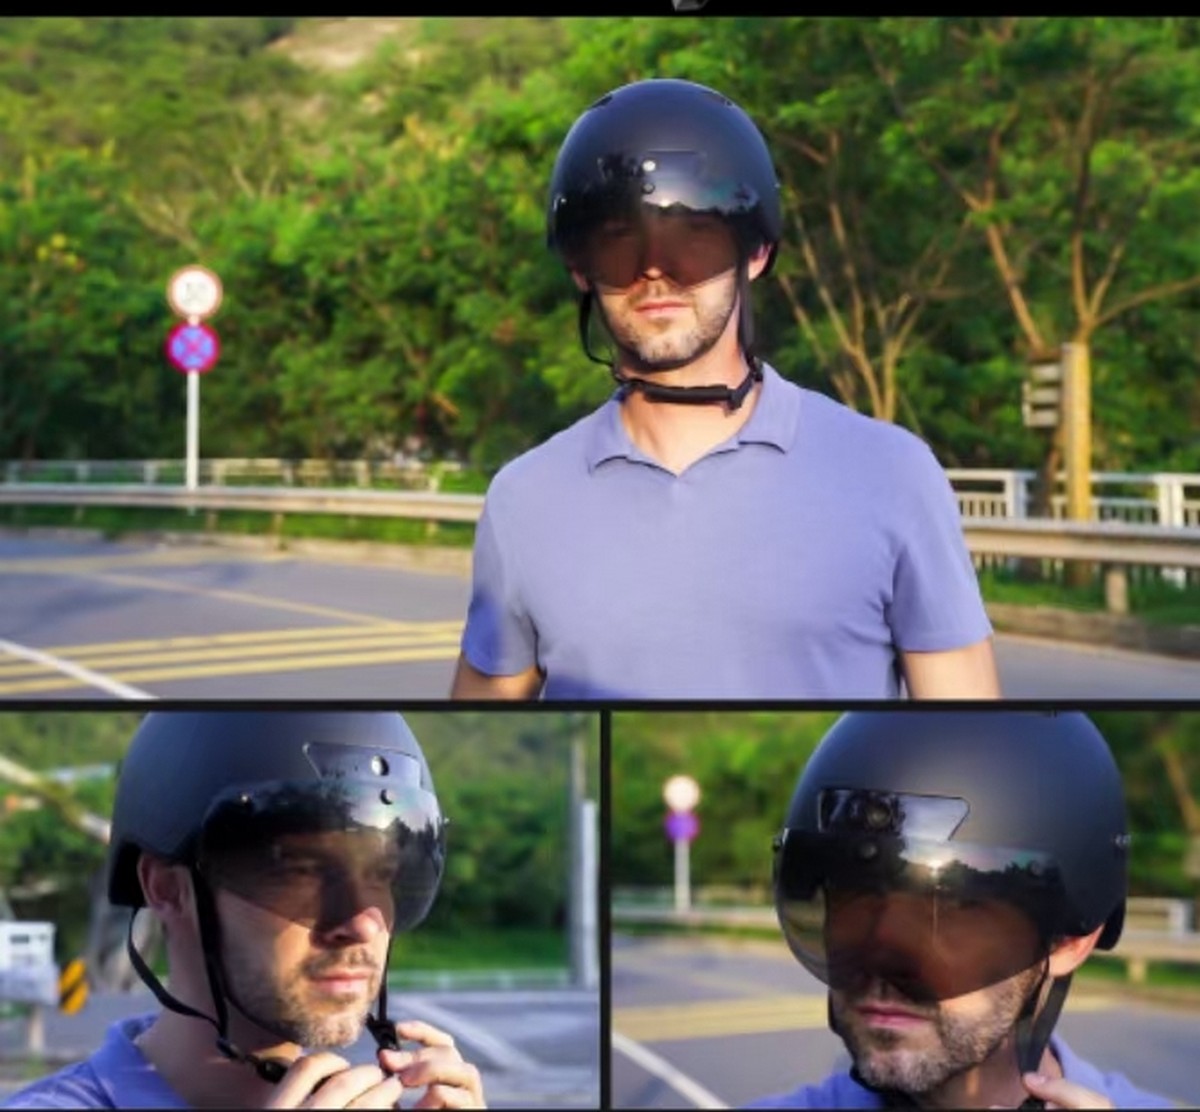 road bike helmet with turn signals